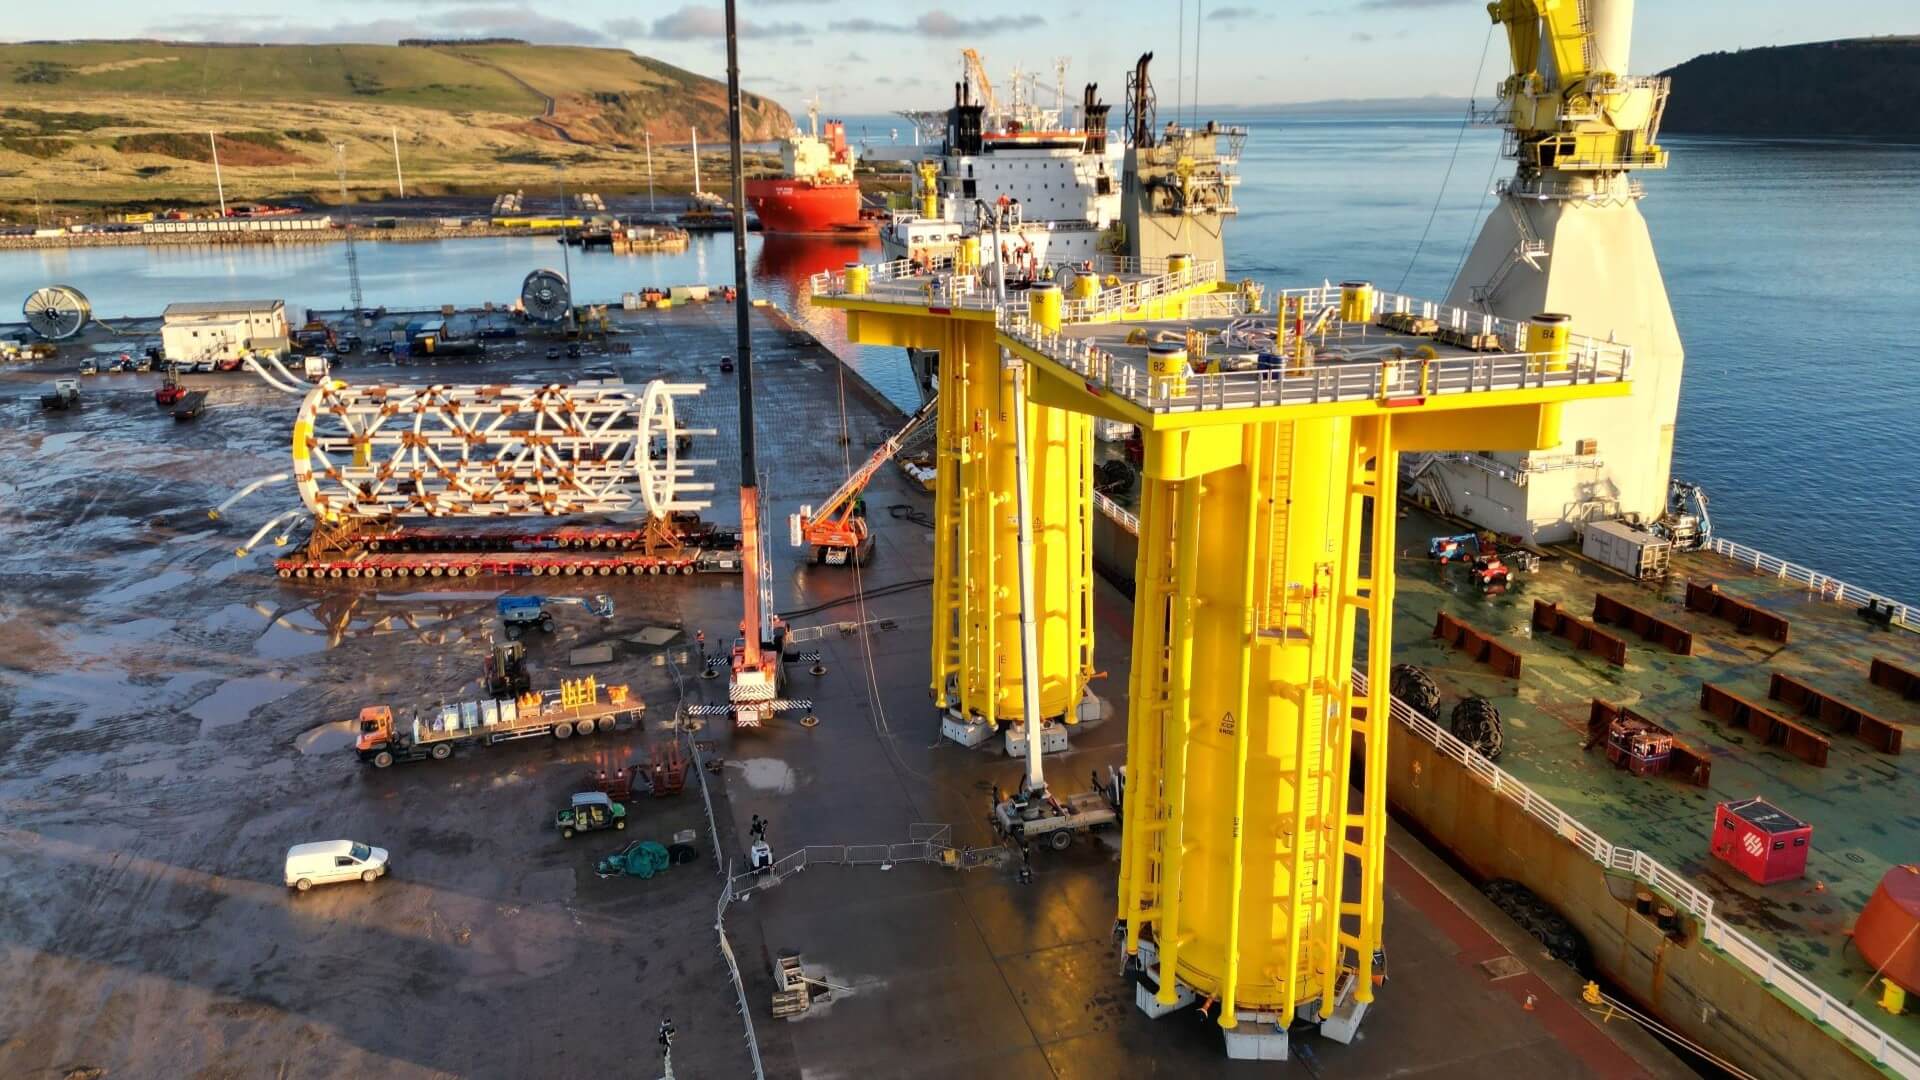 Moray West offshore wind farm under construction 